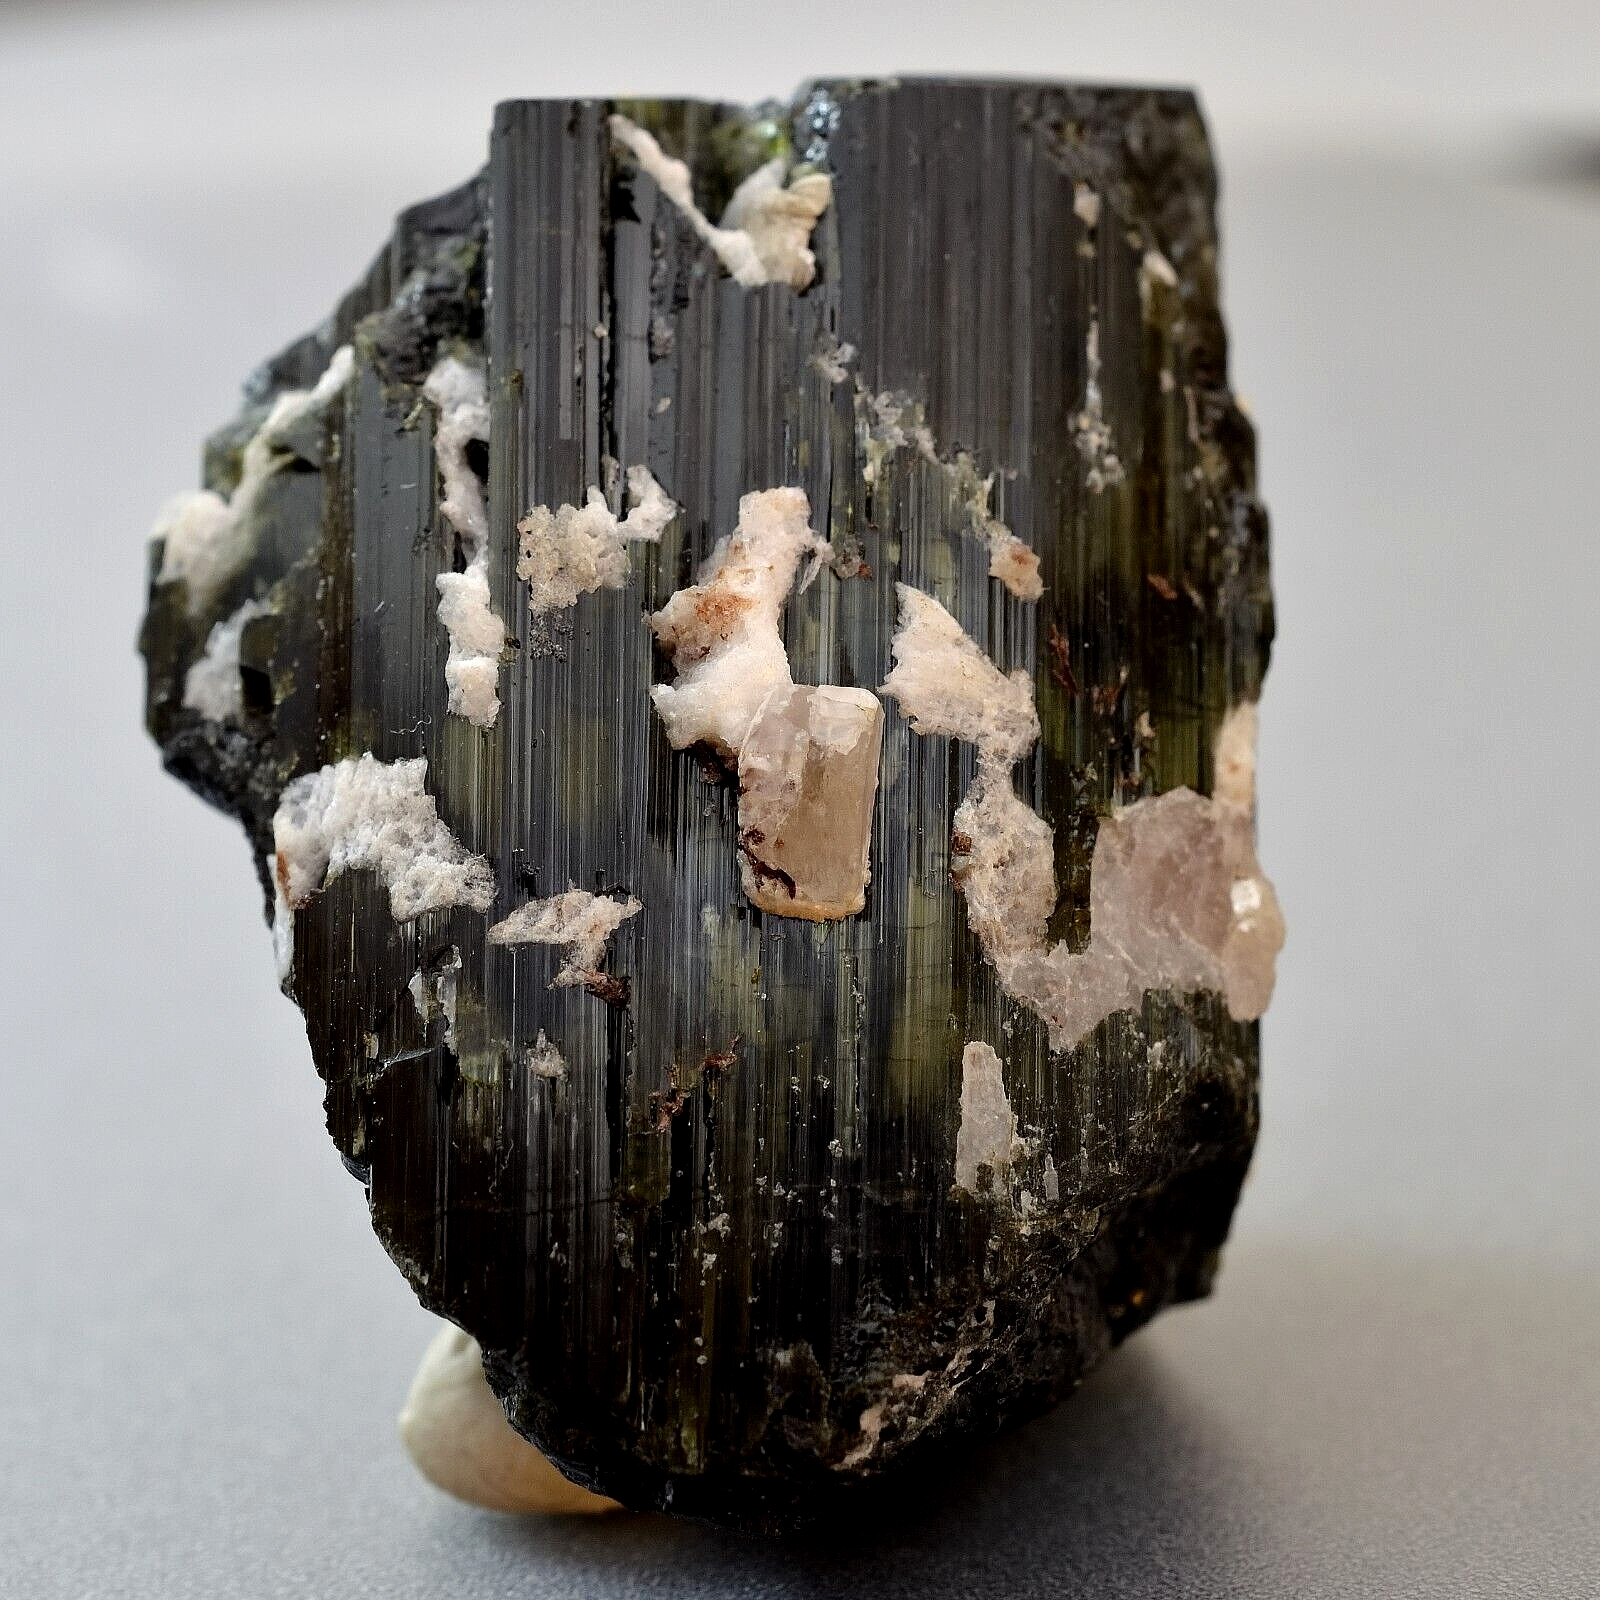 395Ct Schrol Black Tourmaline Crystal Specimen with Apatite from Skardu Pakistan